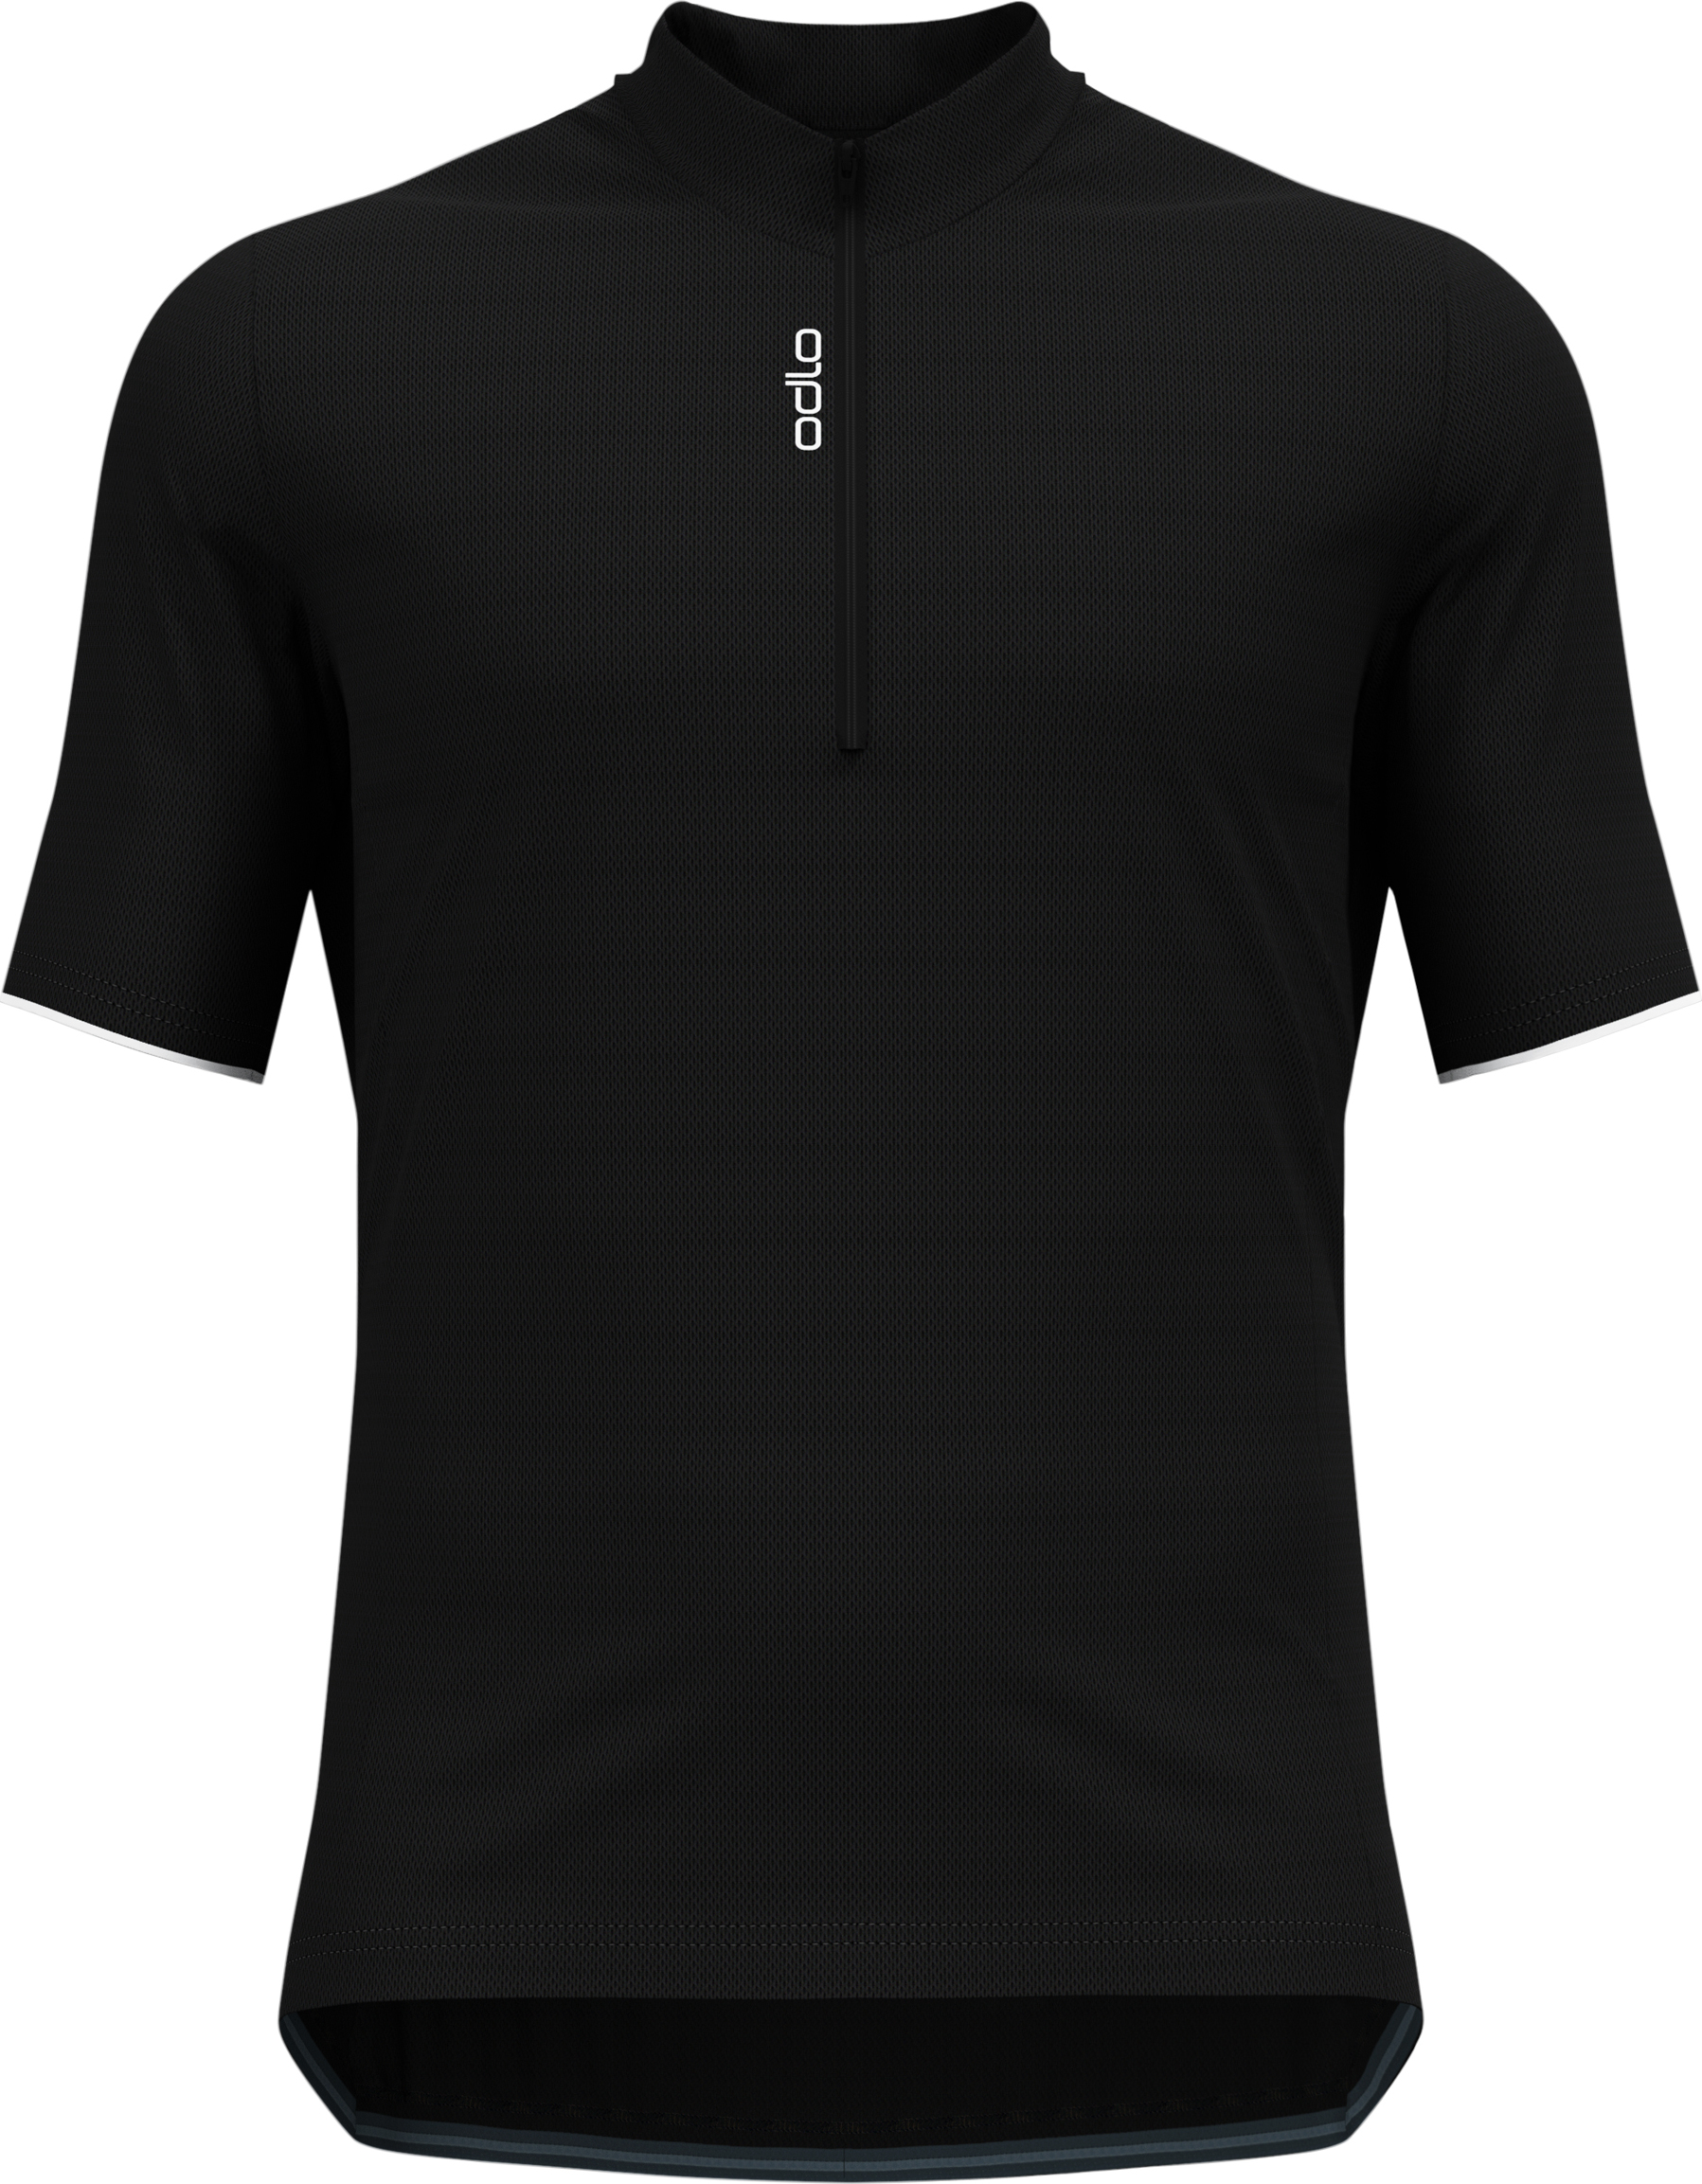 Buy Odlo Crew Neck Essential Seamless Running Shirts Men Grey online